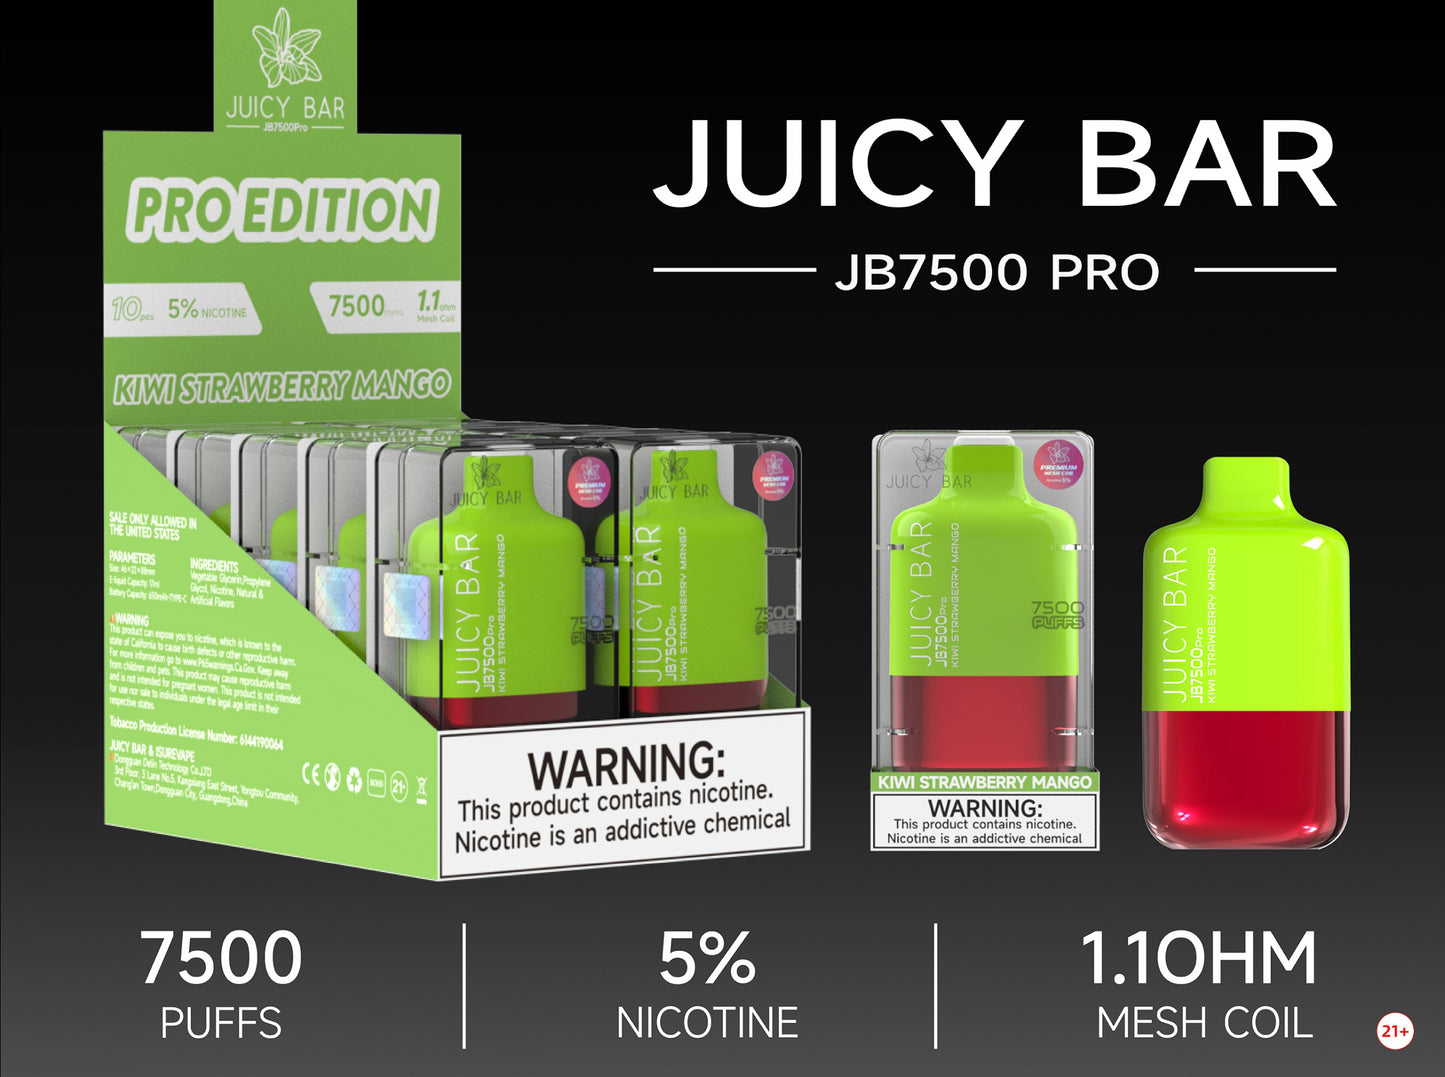 Juicy Bar Pro Edition 7500 Puffs 5% | Kiwi Strawberry Mango with packaging